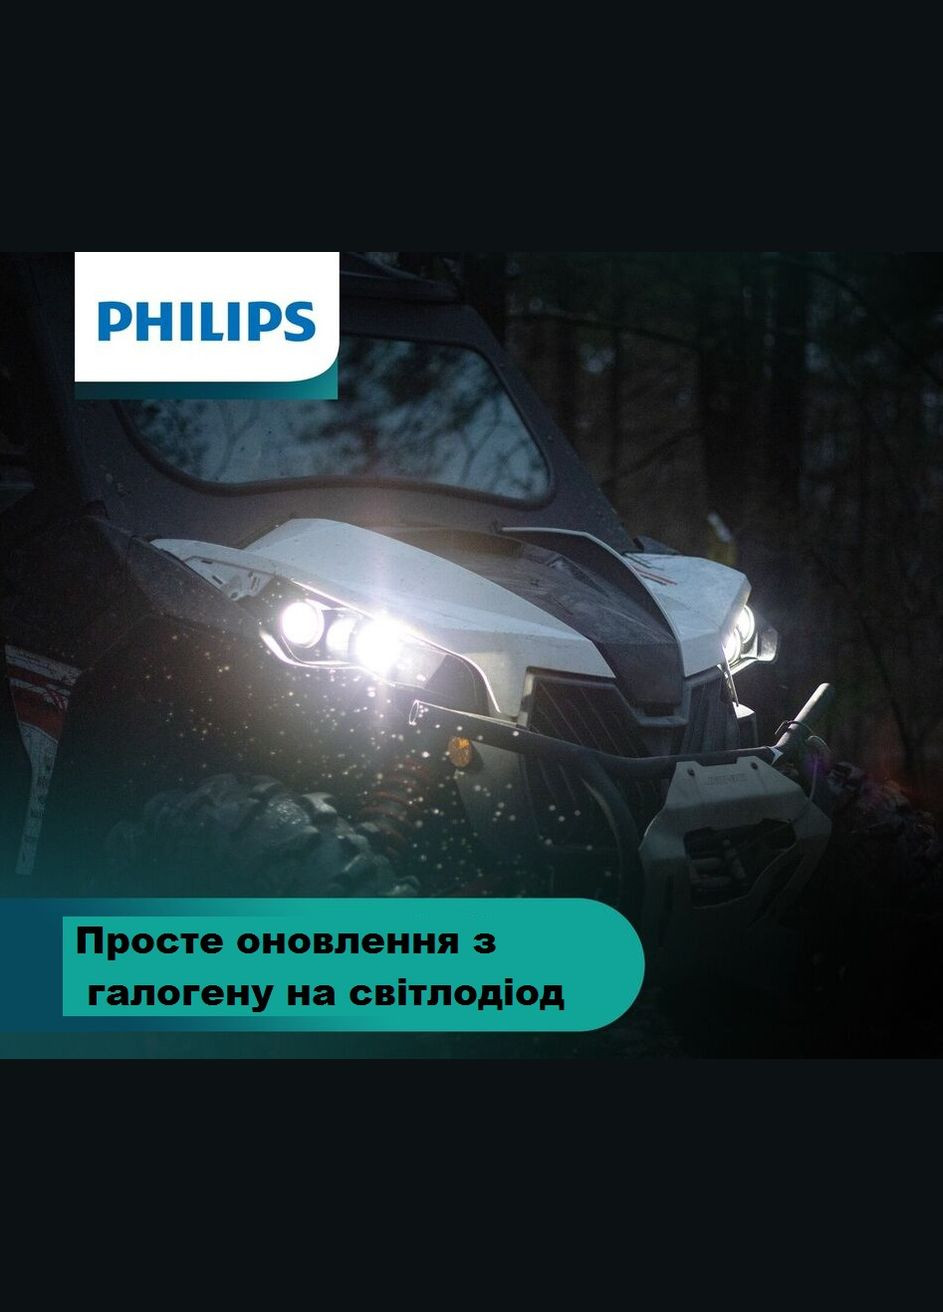 LED Автолампы UltinonSport 9005/9006USLED (HB3) 6000K (2шт) 20W Philips (292132686)